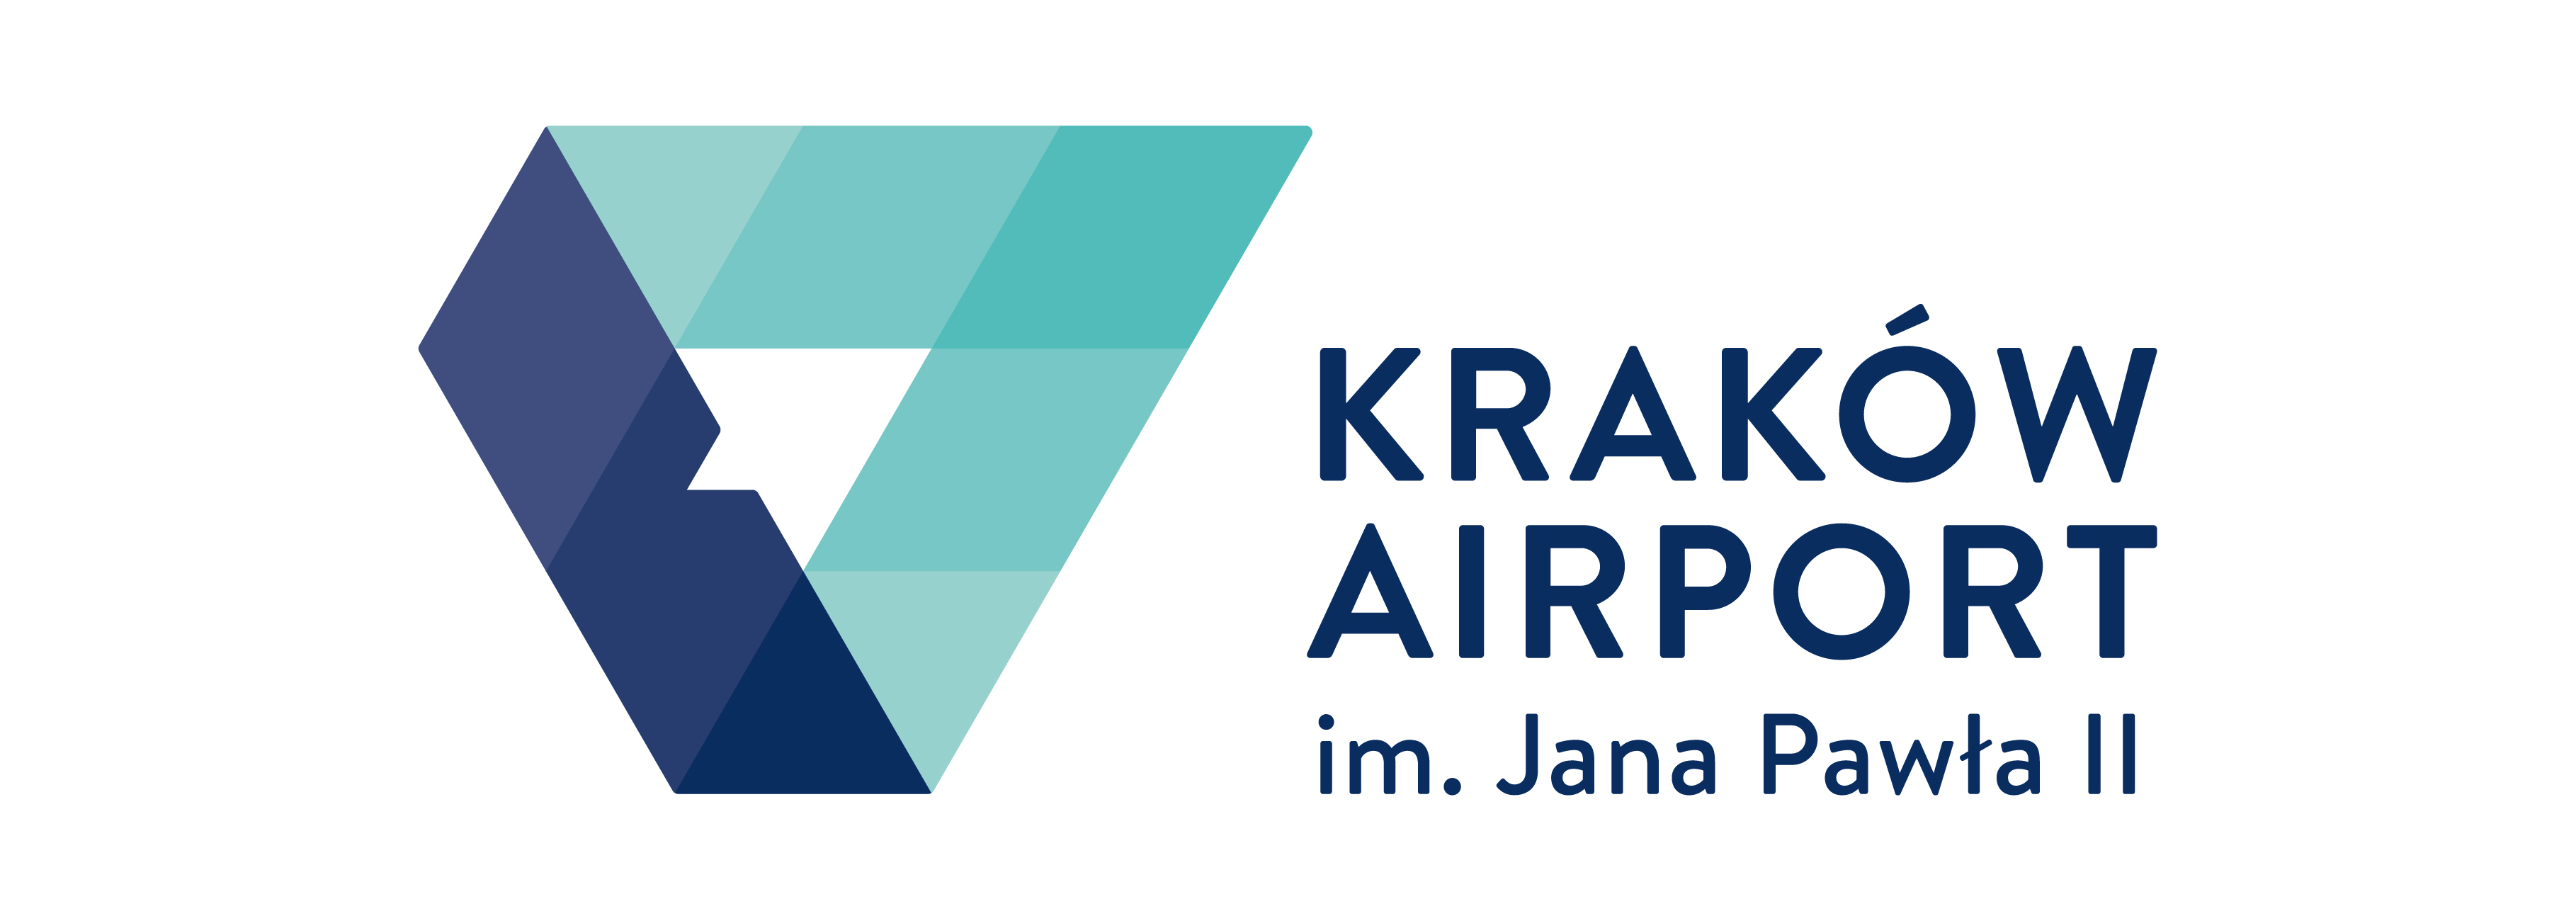 Krakow Airport VIP & Business Services